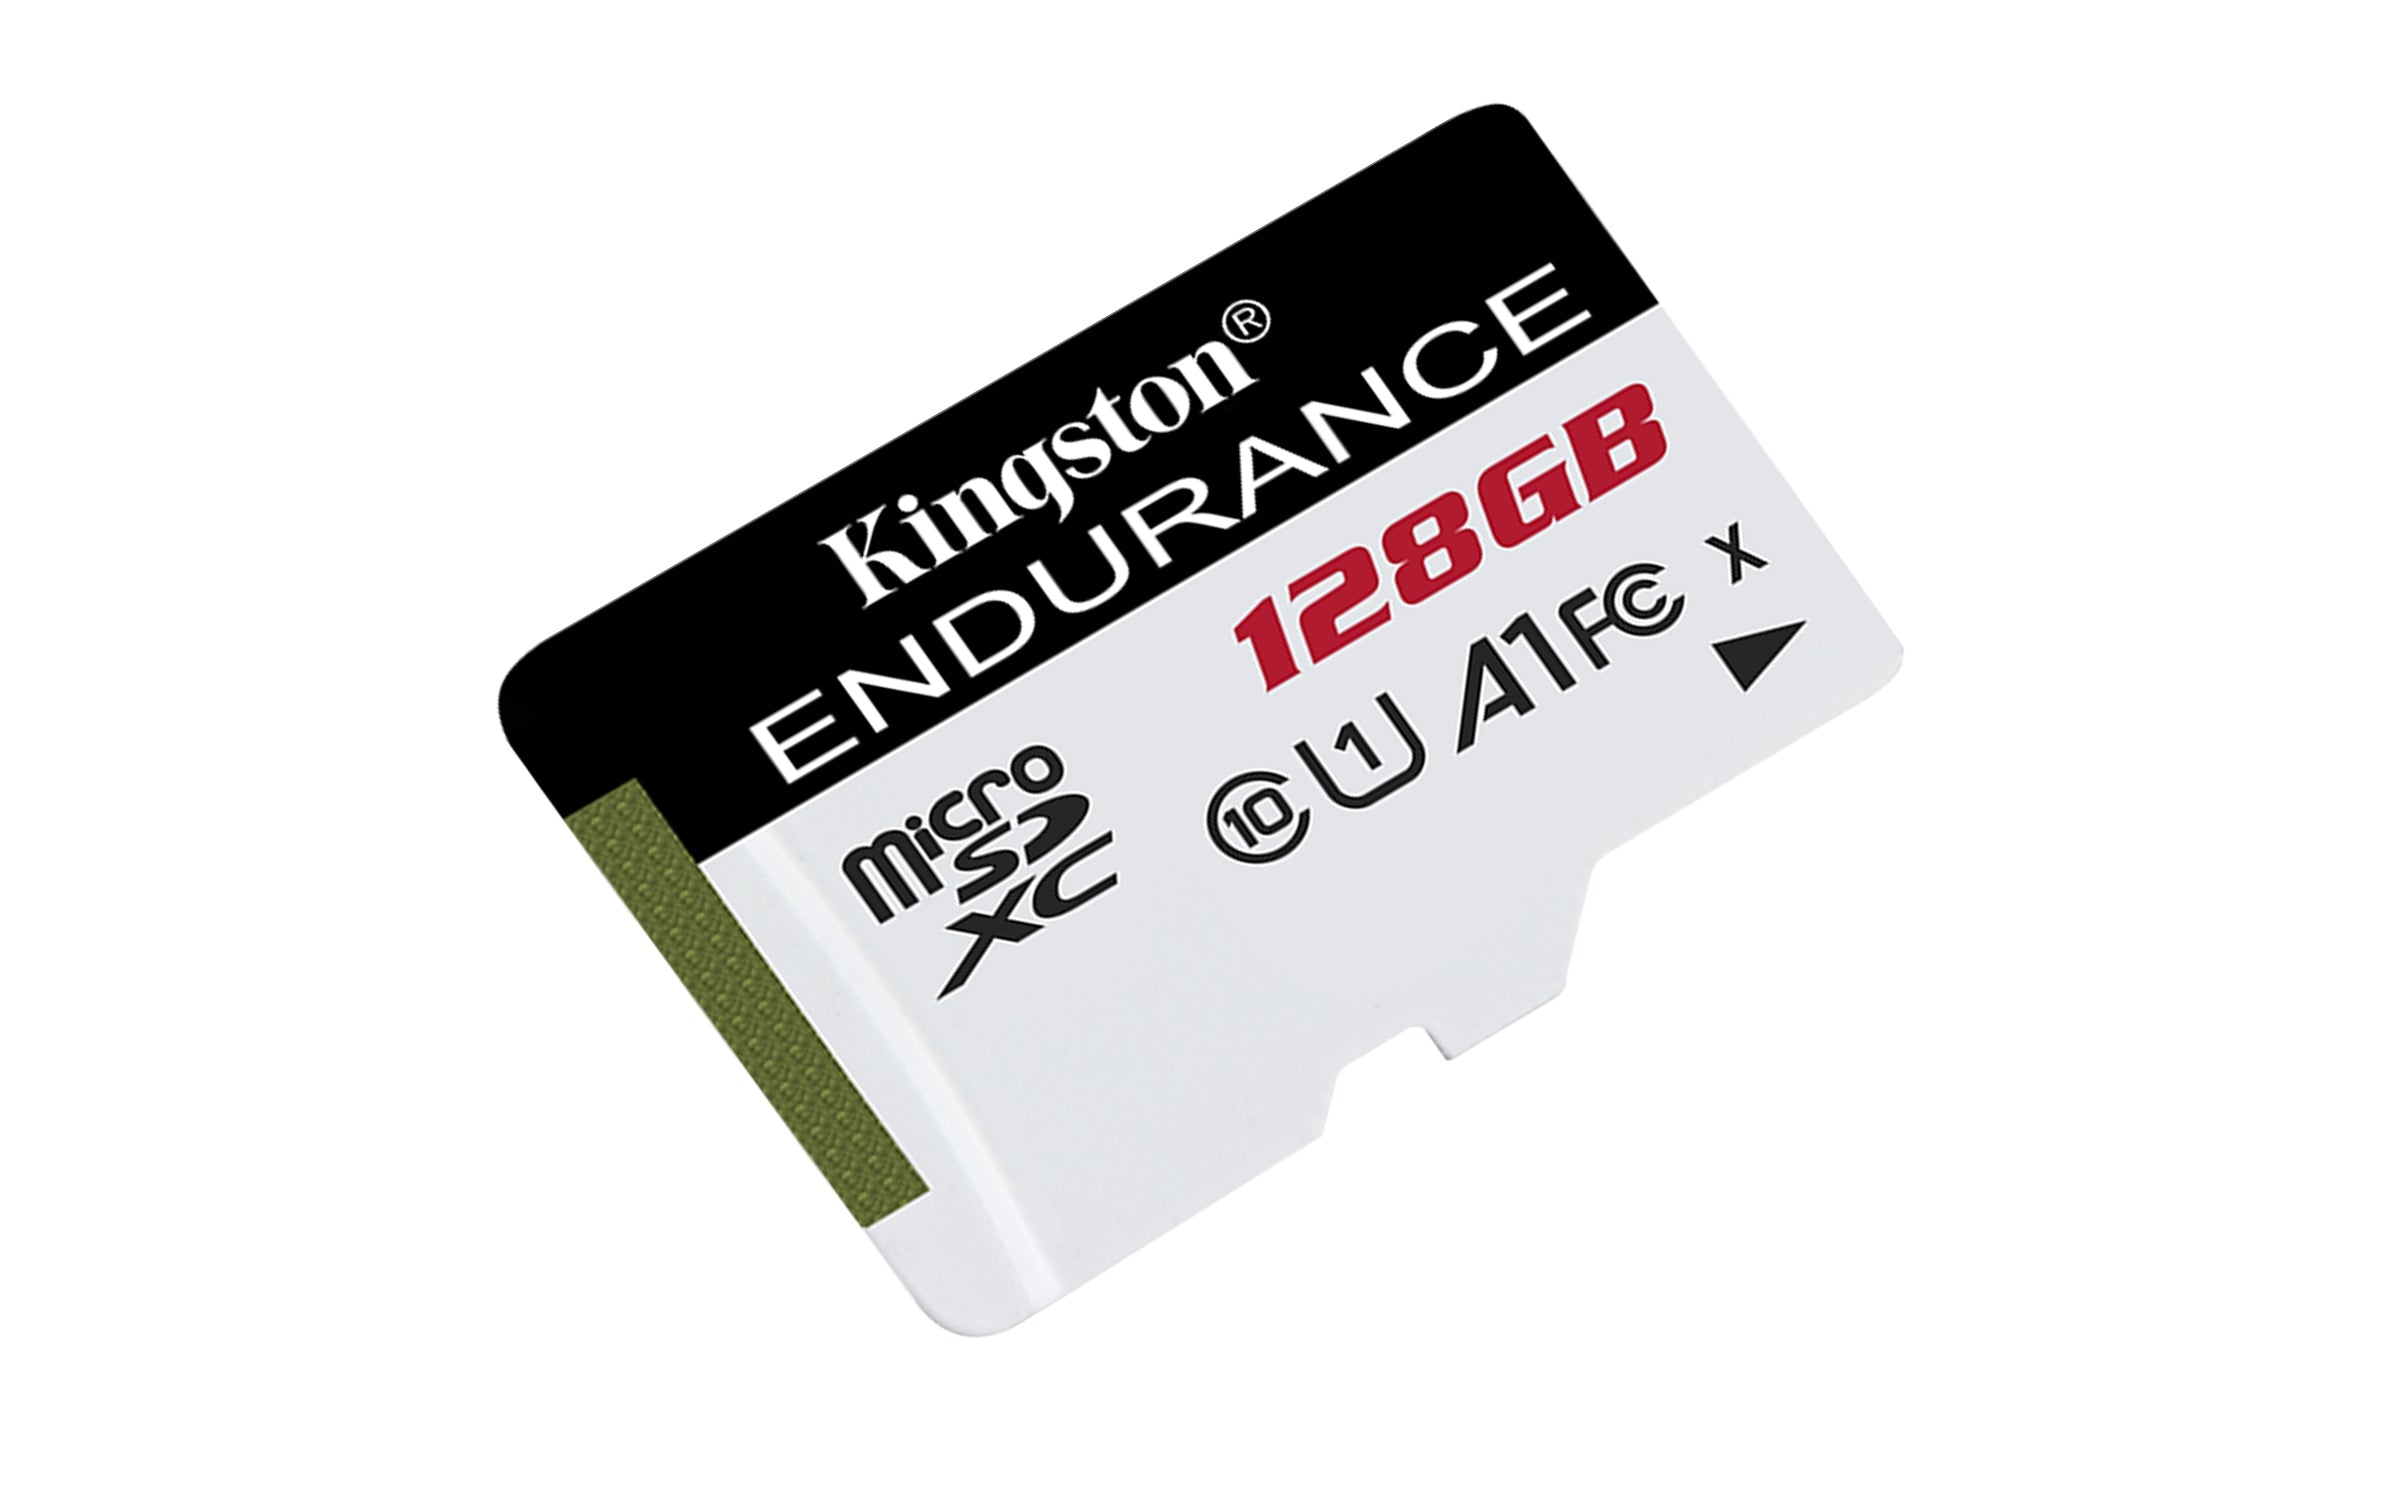 Micro Endurance Kingston Technology Cl10 128 Gb 95 Mb/S 45